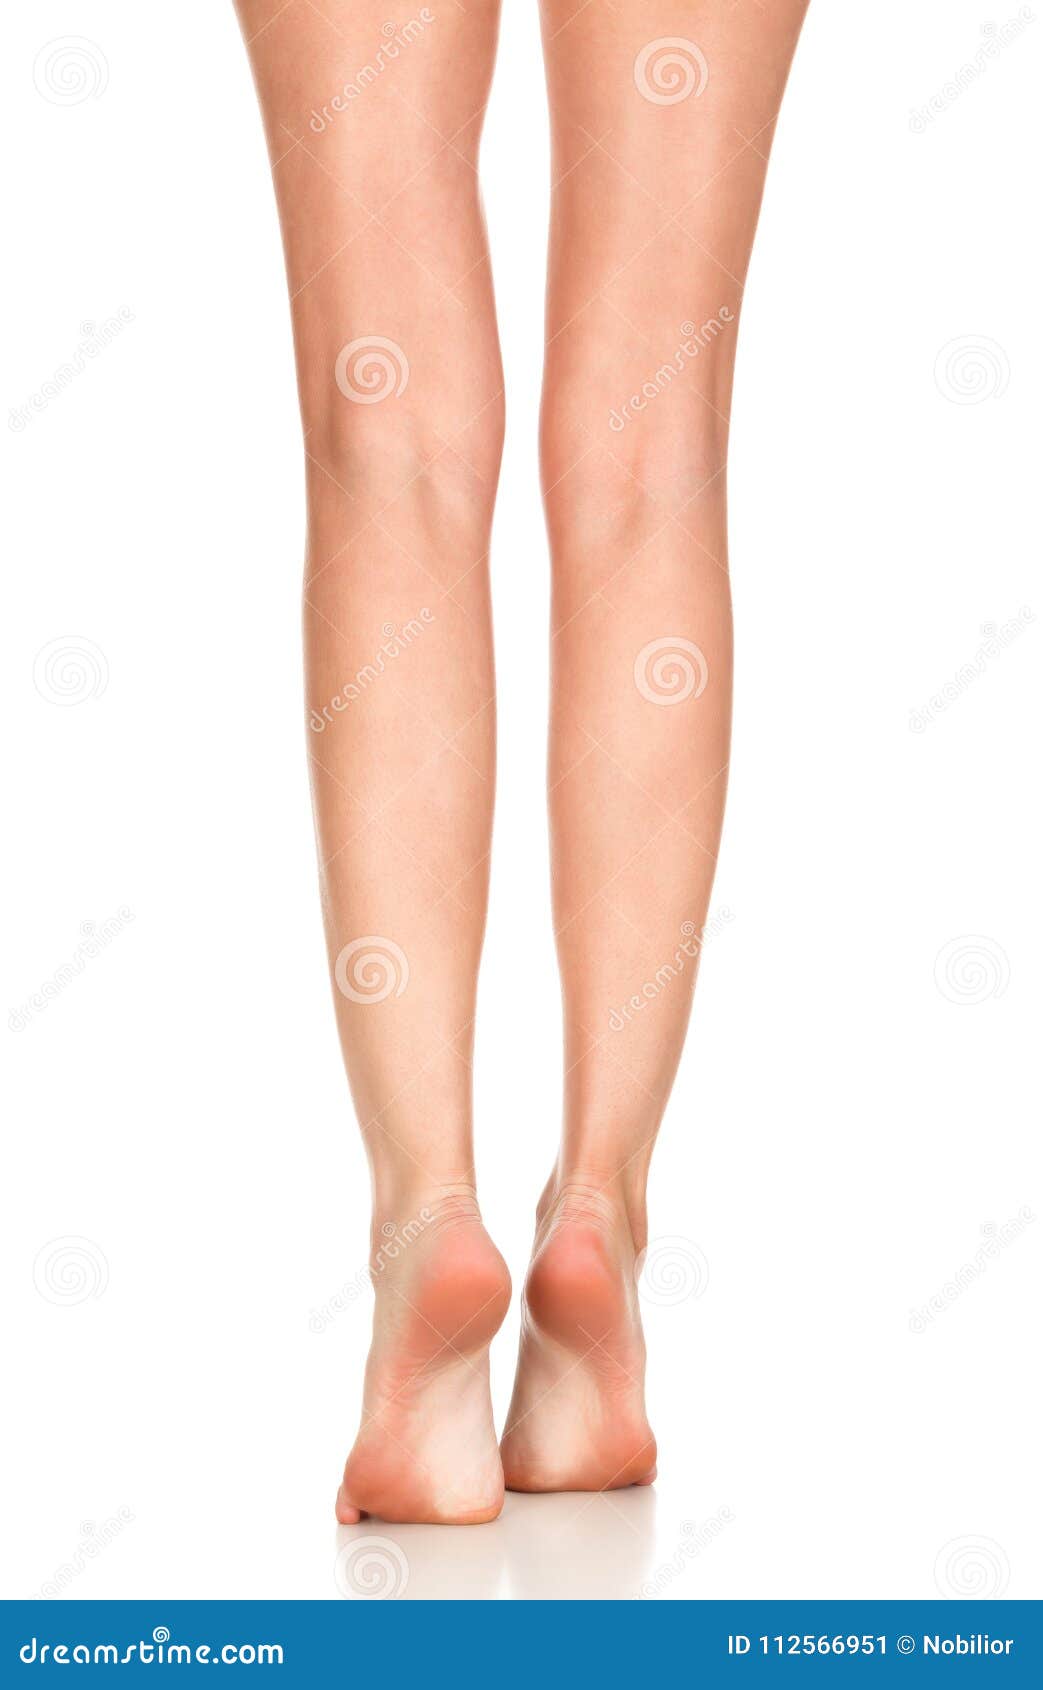 Closeup Shot of Female Bare Feet Stock Image - Image of clean, care:  112566951